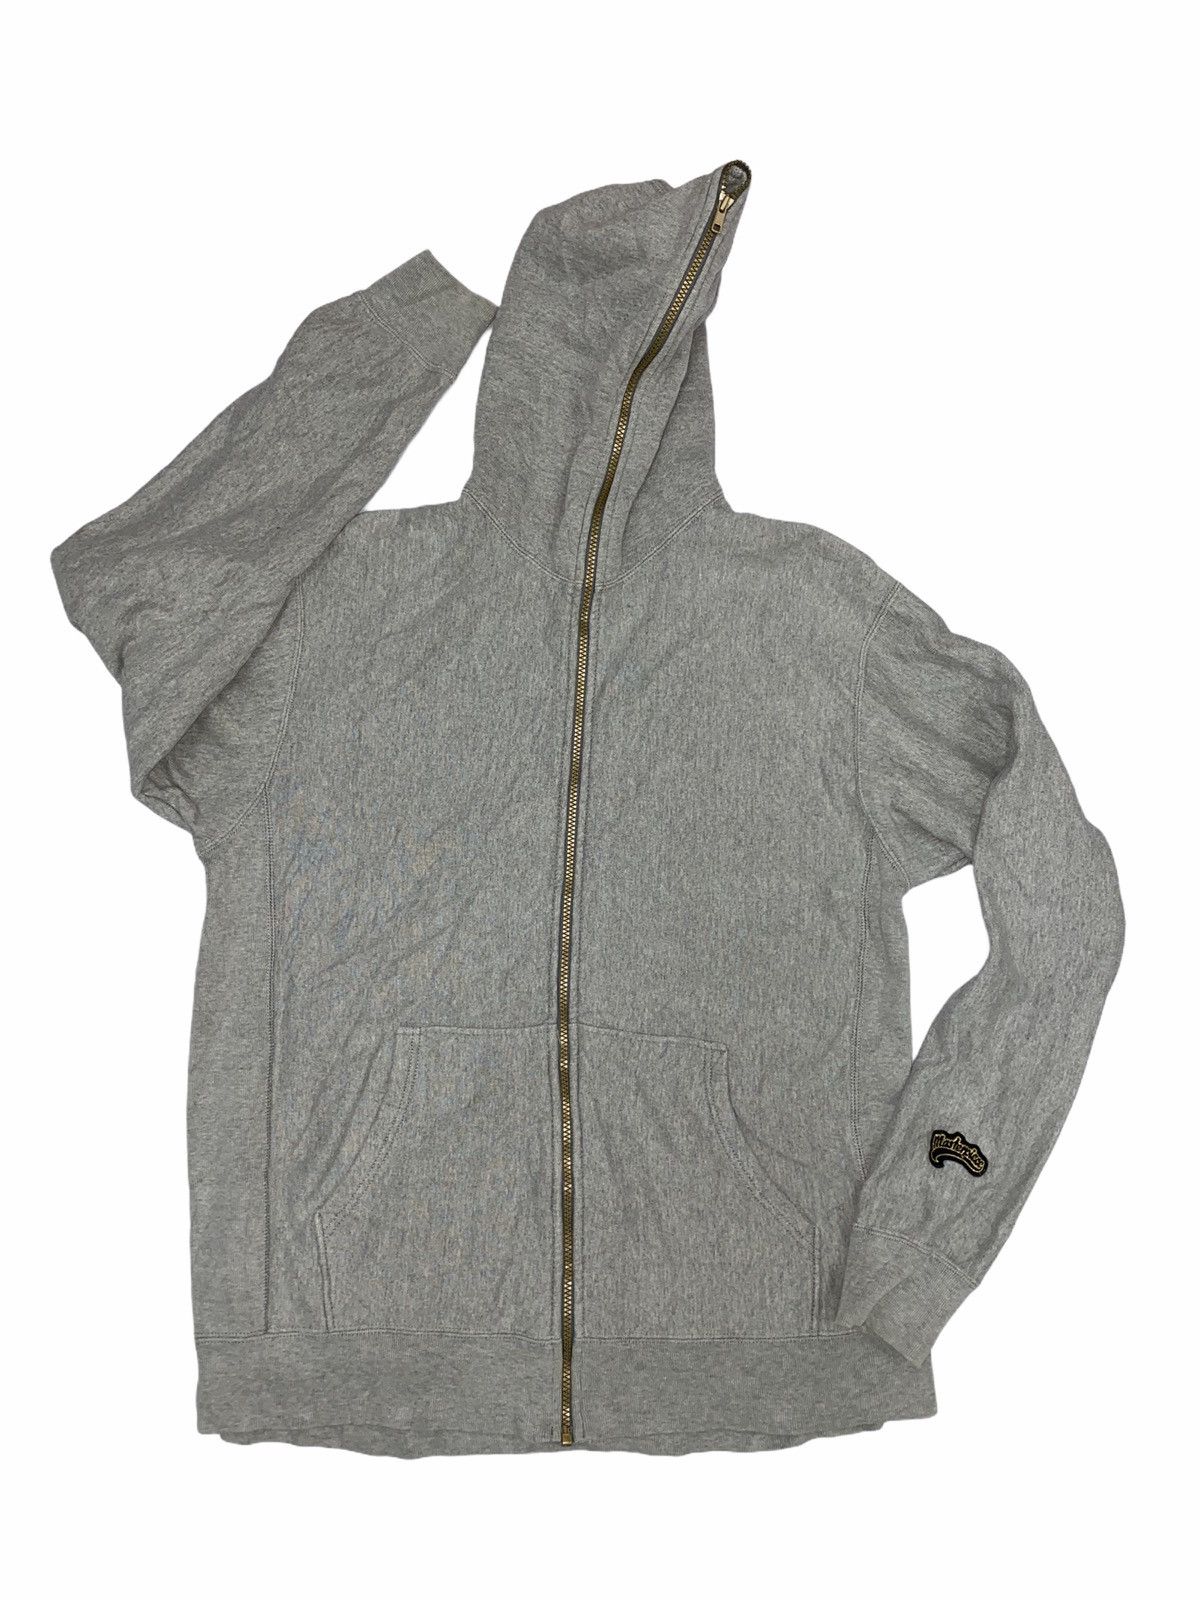 MasterPiece Master Piece Full zipper hoodie heavy sweatshirt Size US L / EU 52-54 / 3 - 1 Preview